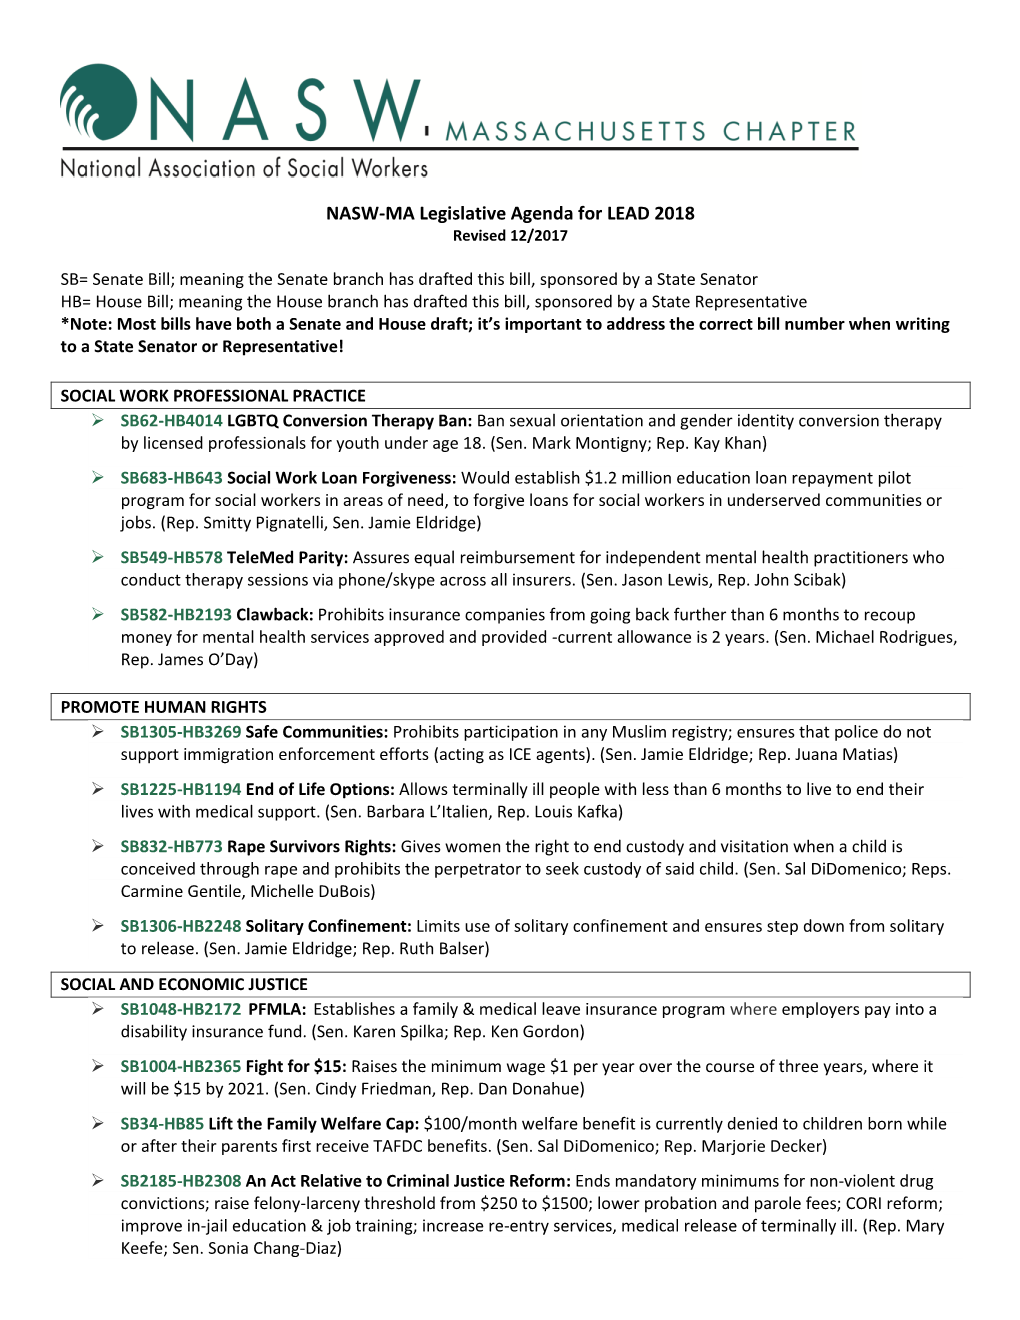 NASW-MA Legislative Agenda for LEAD 2018 Revised 12/2017